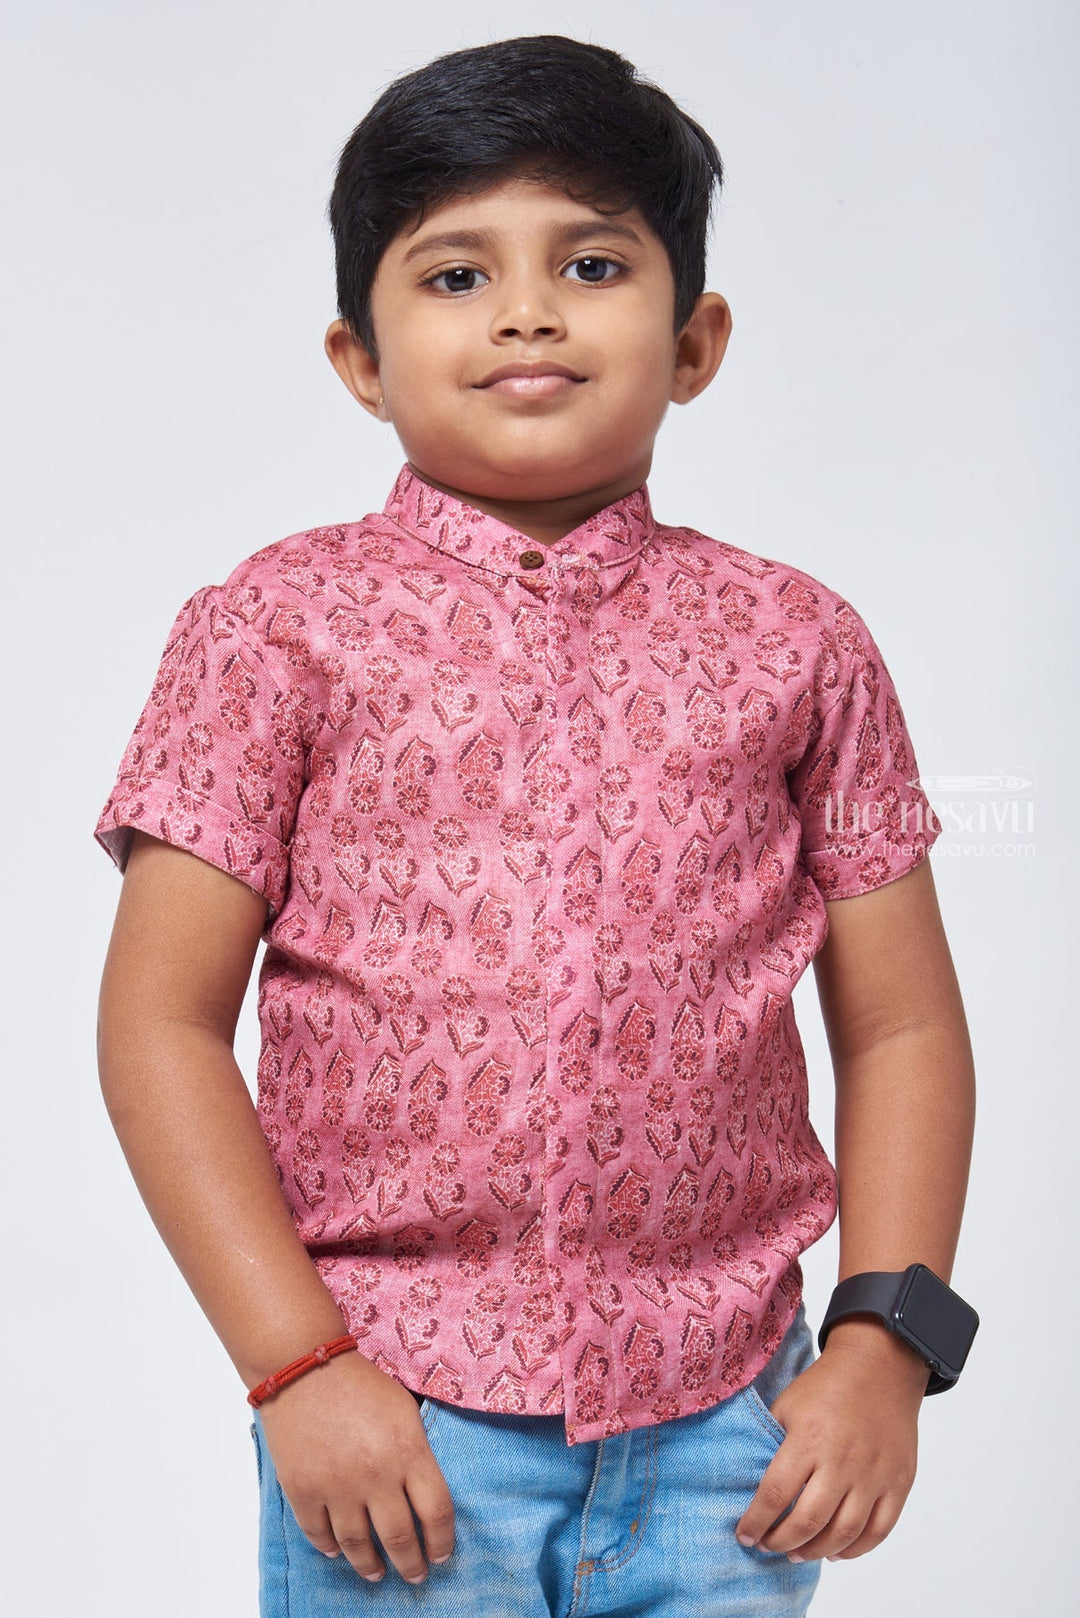 The Nesavu Boys Linen Shirt Cultural Essence: Linen Boys' Shirt with Handcrafted Traditional Indie Prints for Authenticity Nesavu 14 (6M) / Pink / Linen BS070-14 Handcrafted Traditional Indie Print Shirt | Boys Printed Shirt | The Nesavu